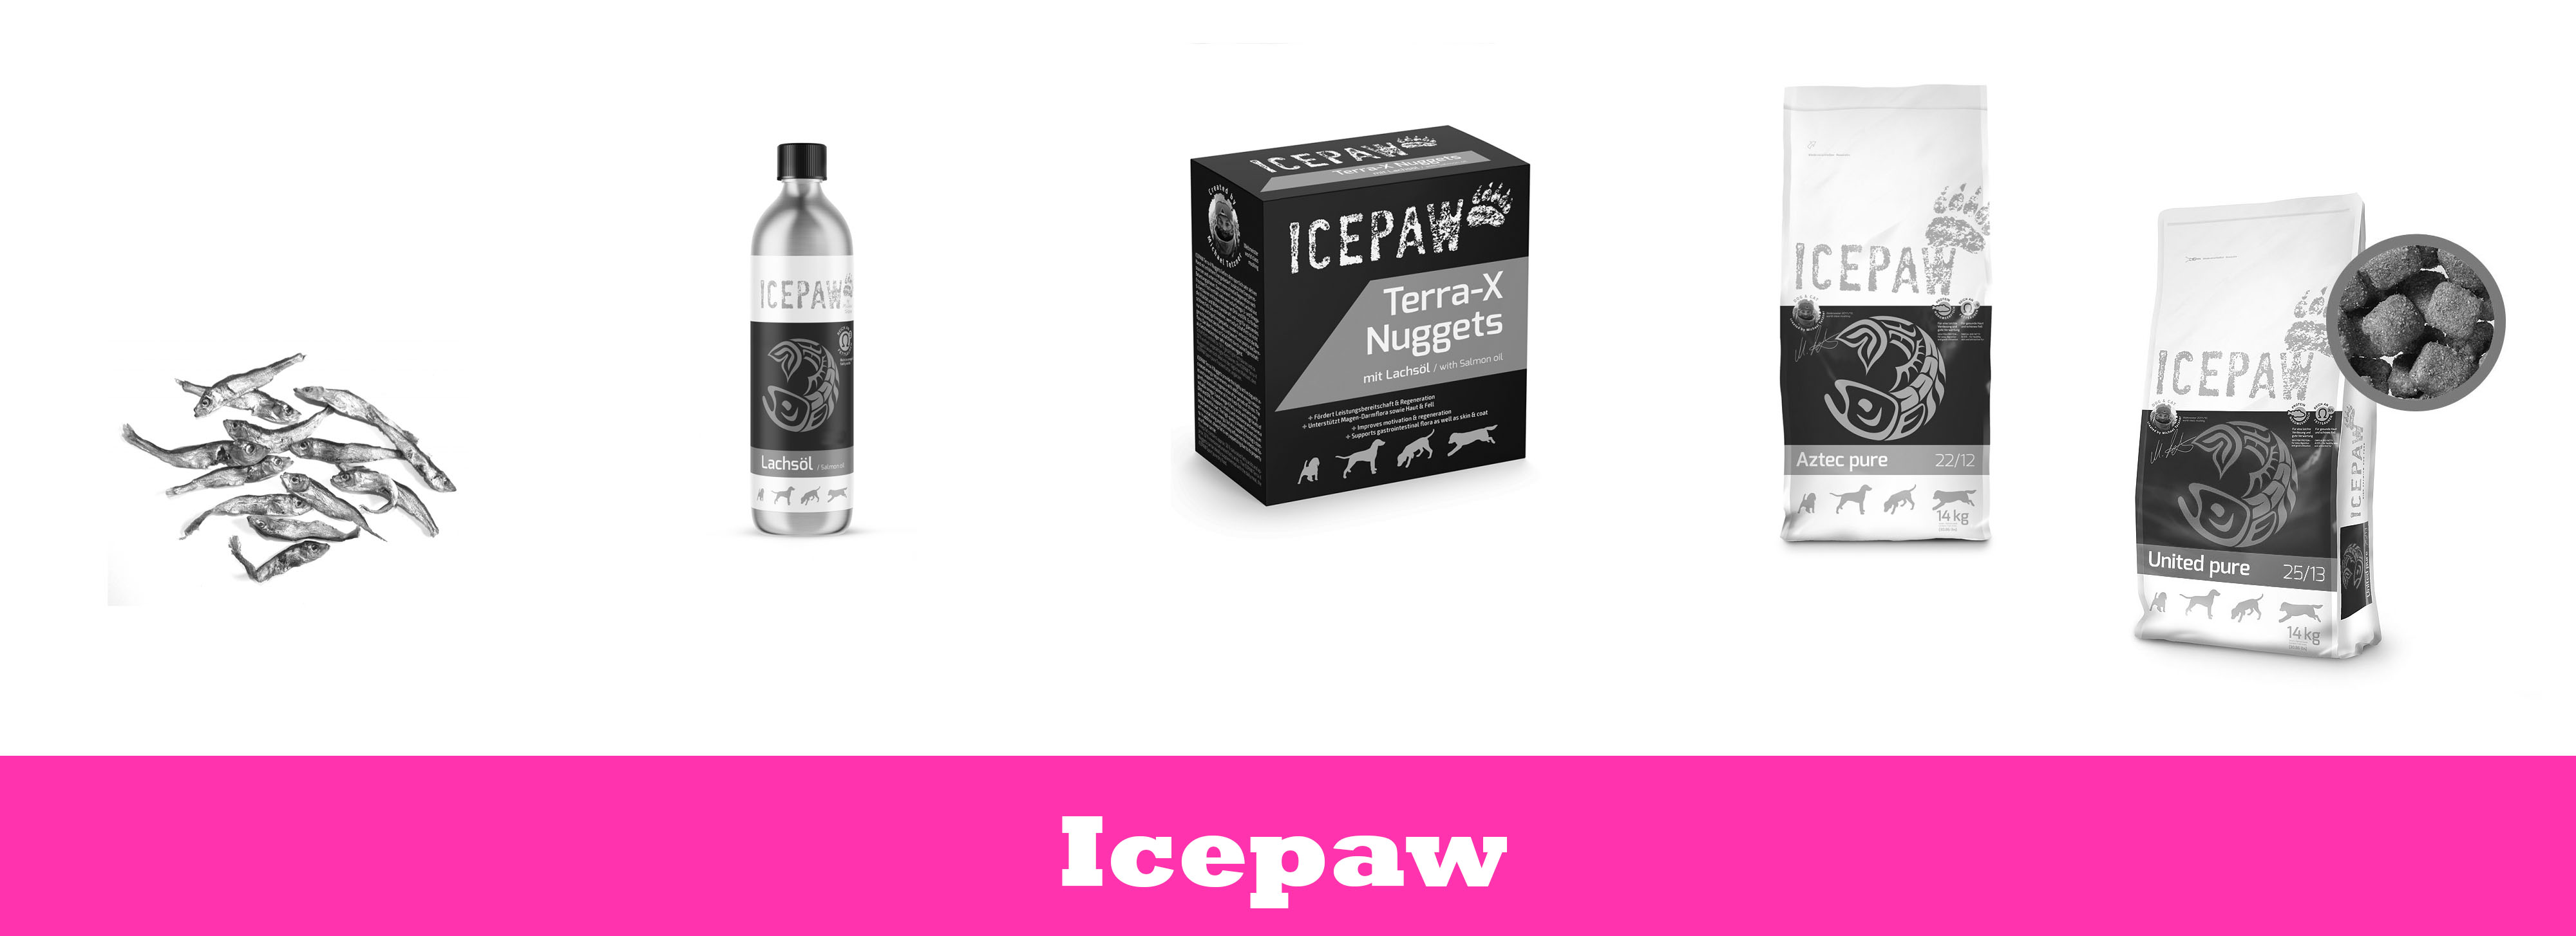 Icepaw